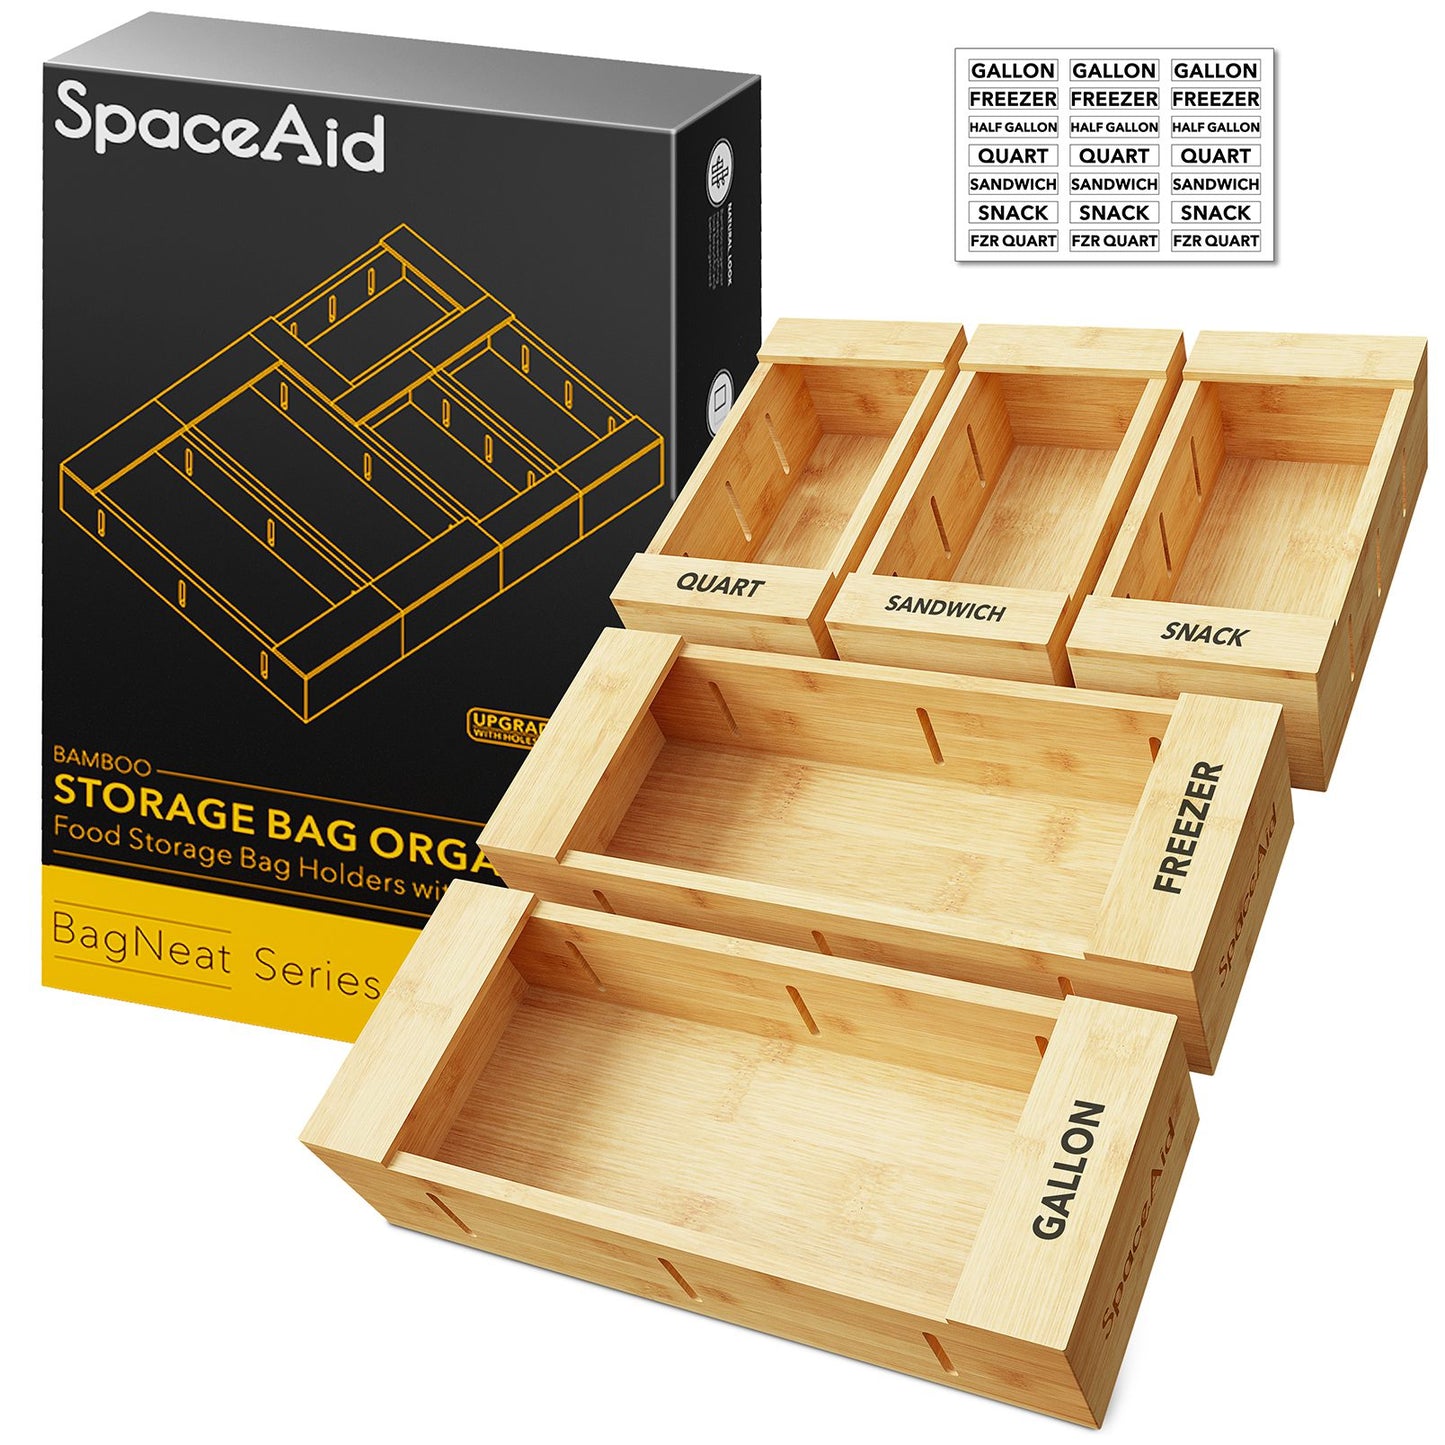 SpaceAid bag organizer storage